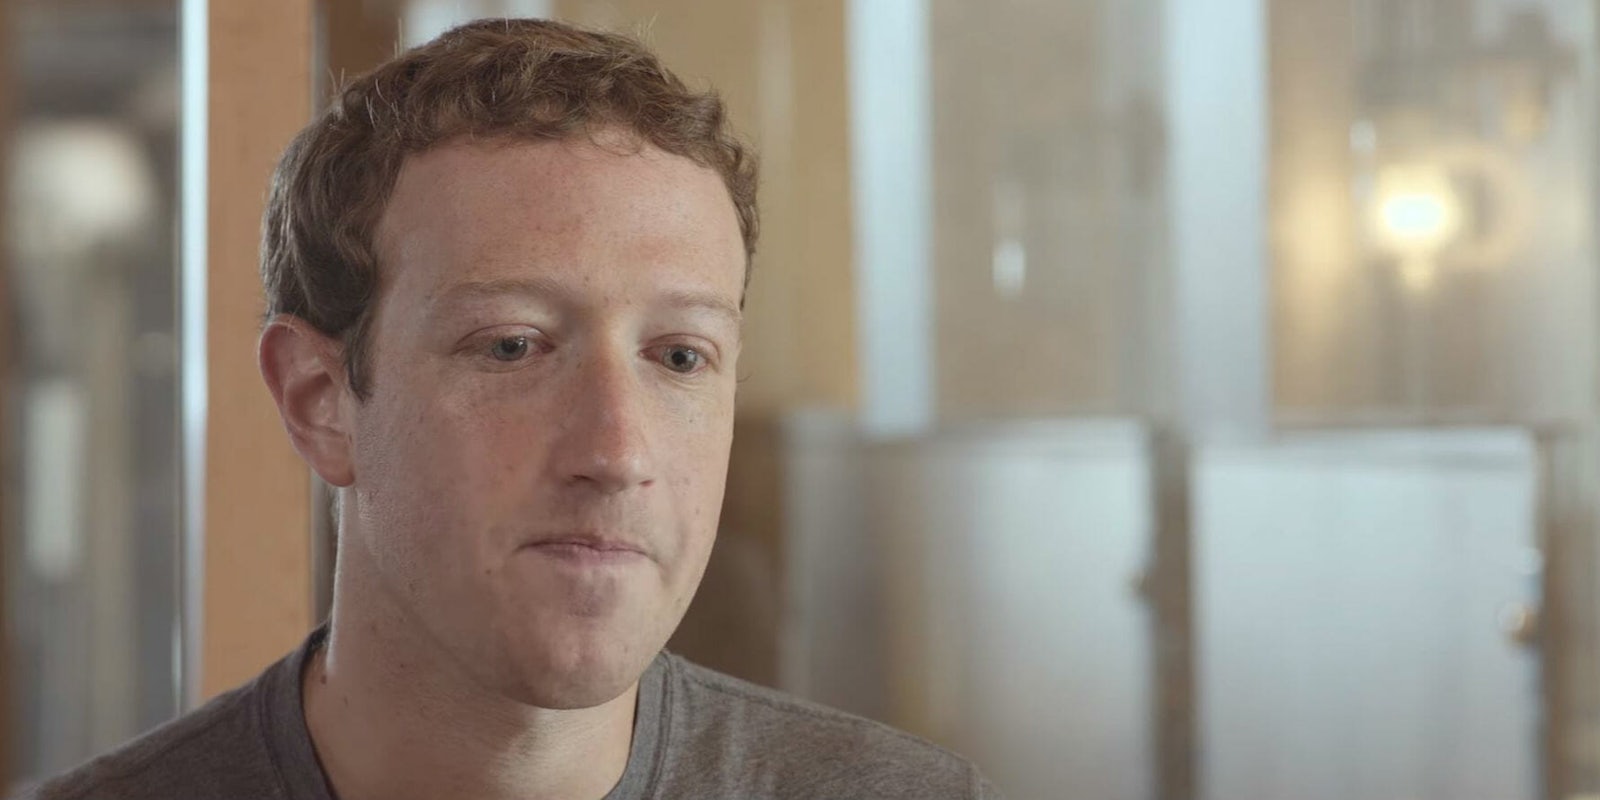 Mark Zuckerberg, Facebook's CEO, will testify before Congress on April 11.